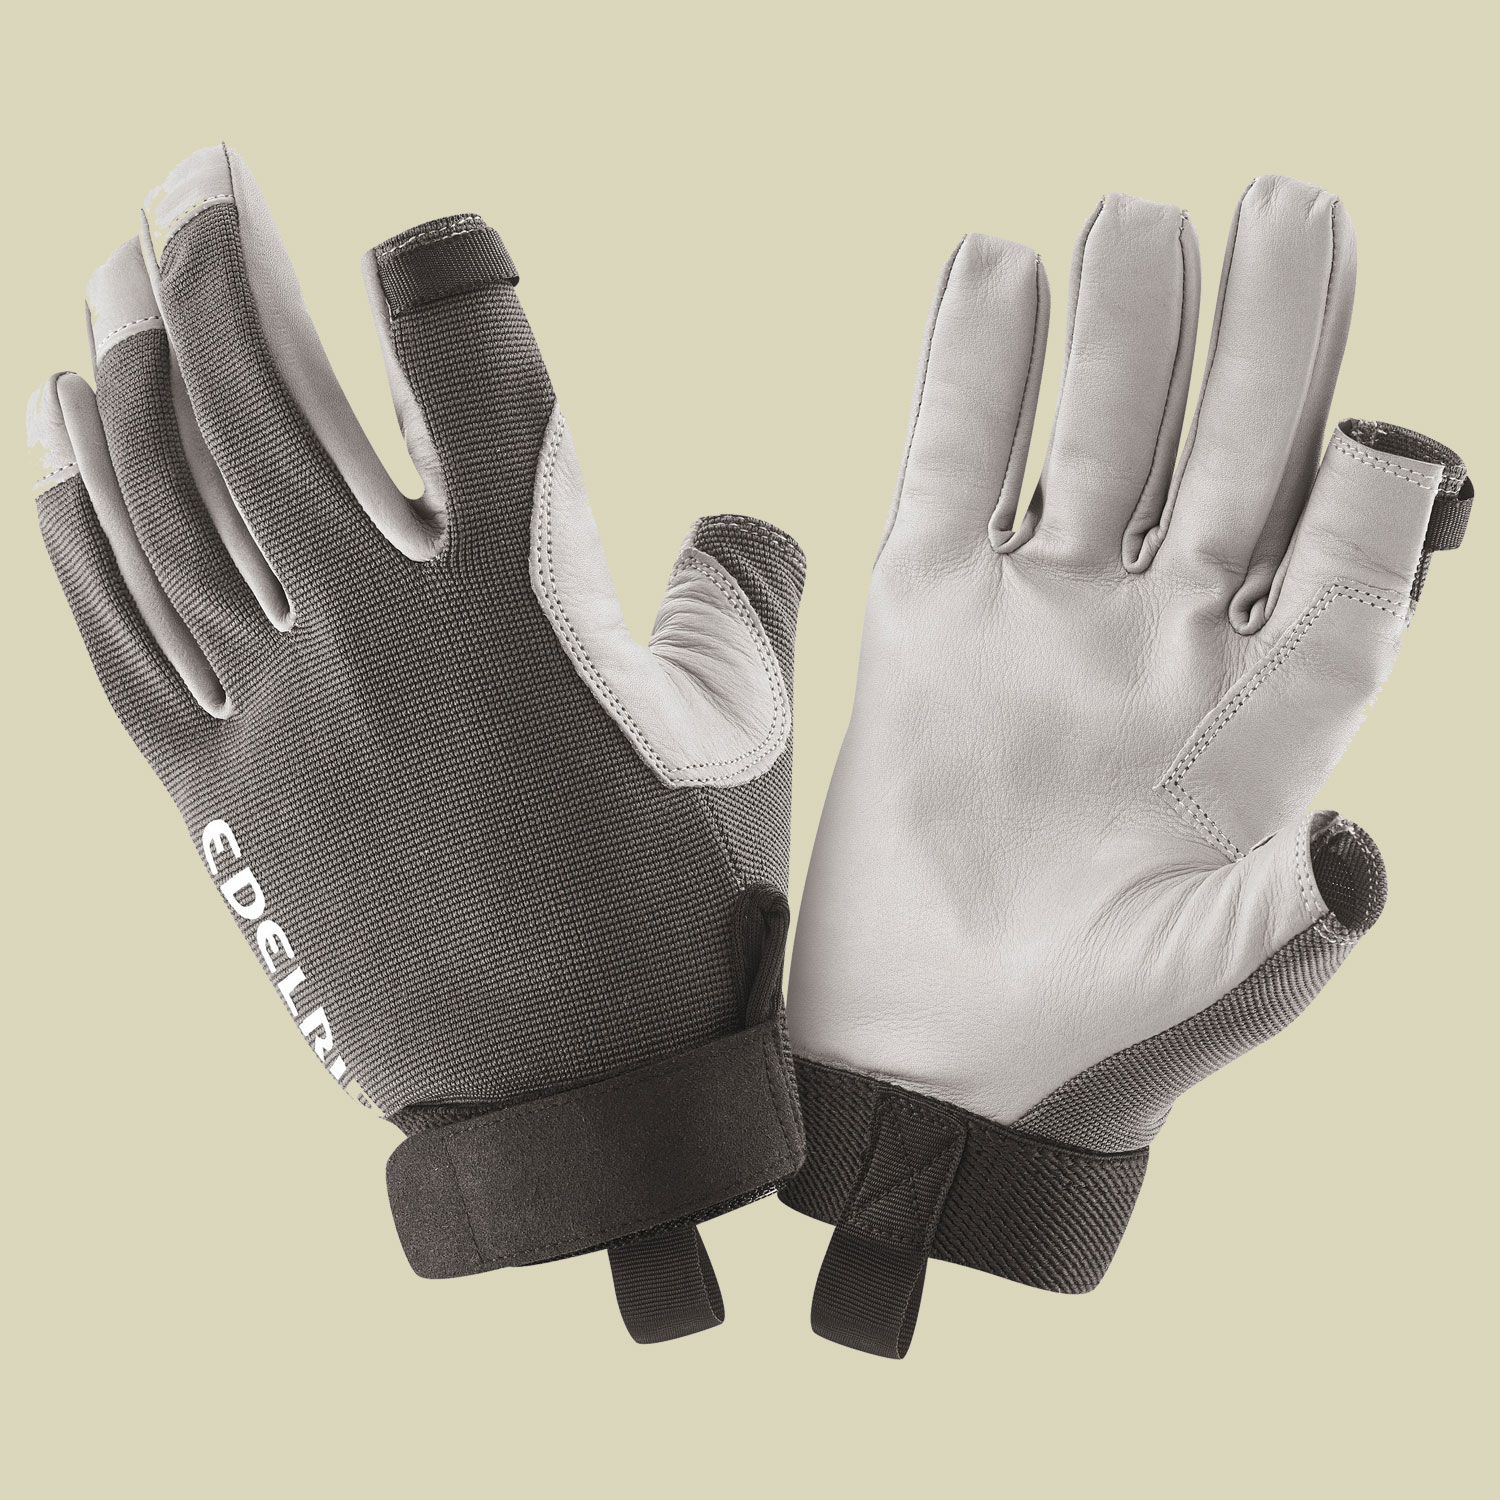 Work Glove Closed Größe M Farbe titan